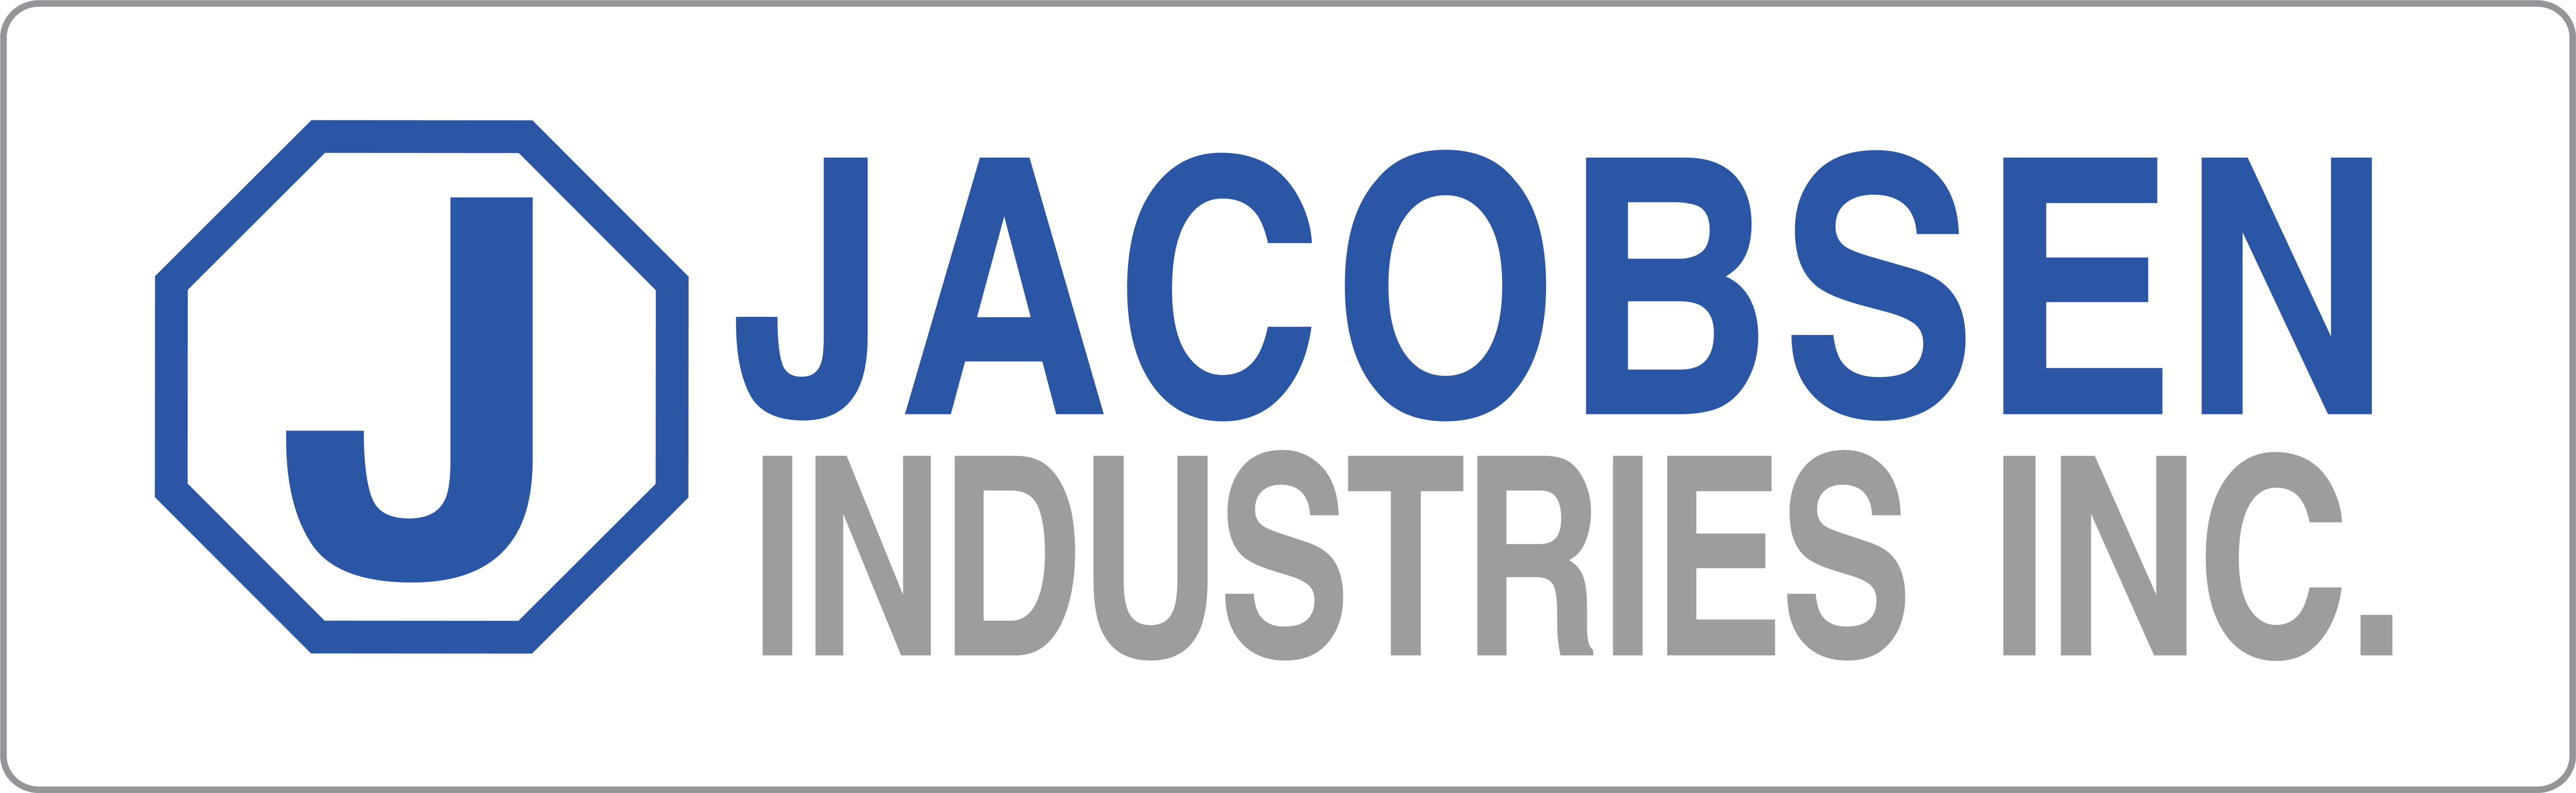 Jacobsen Industries Company Logo